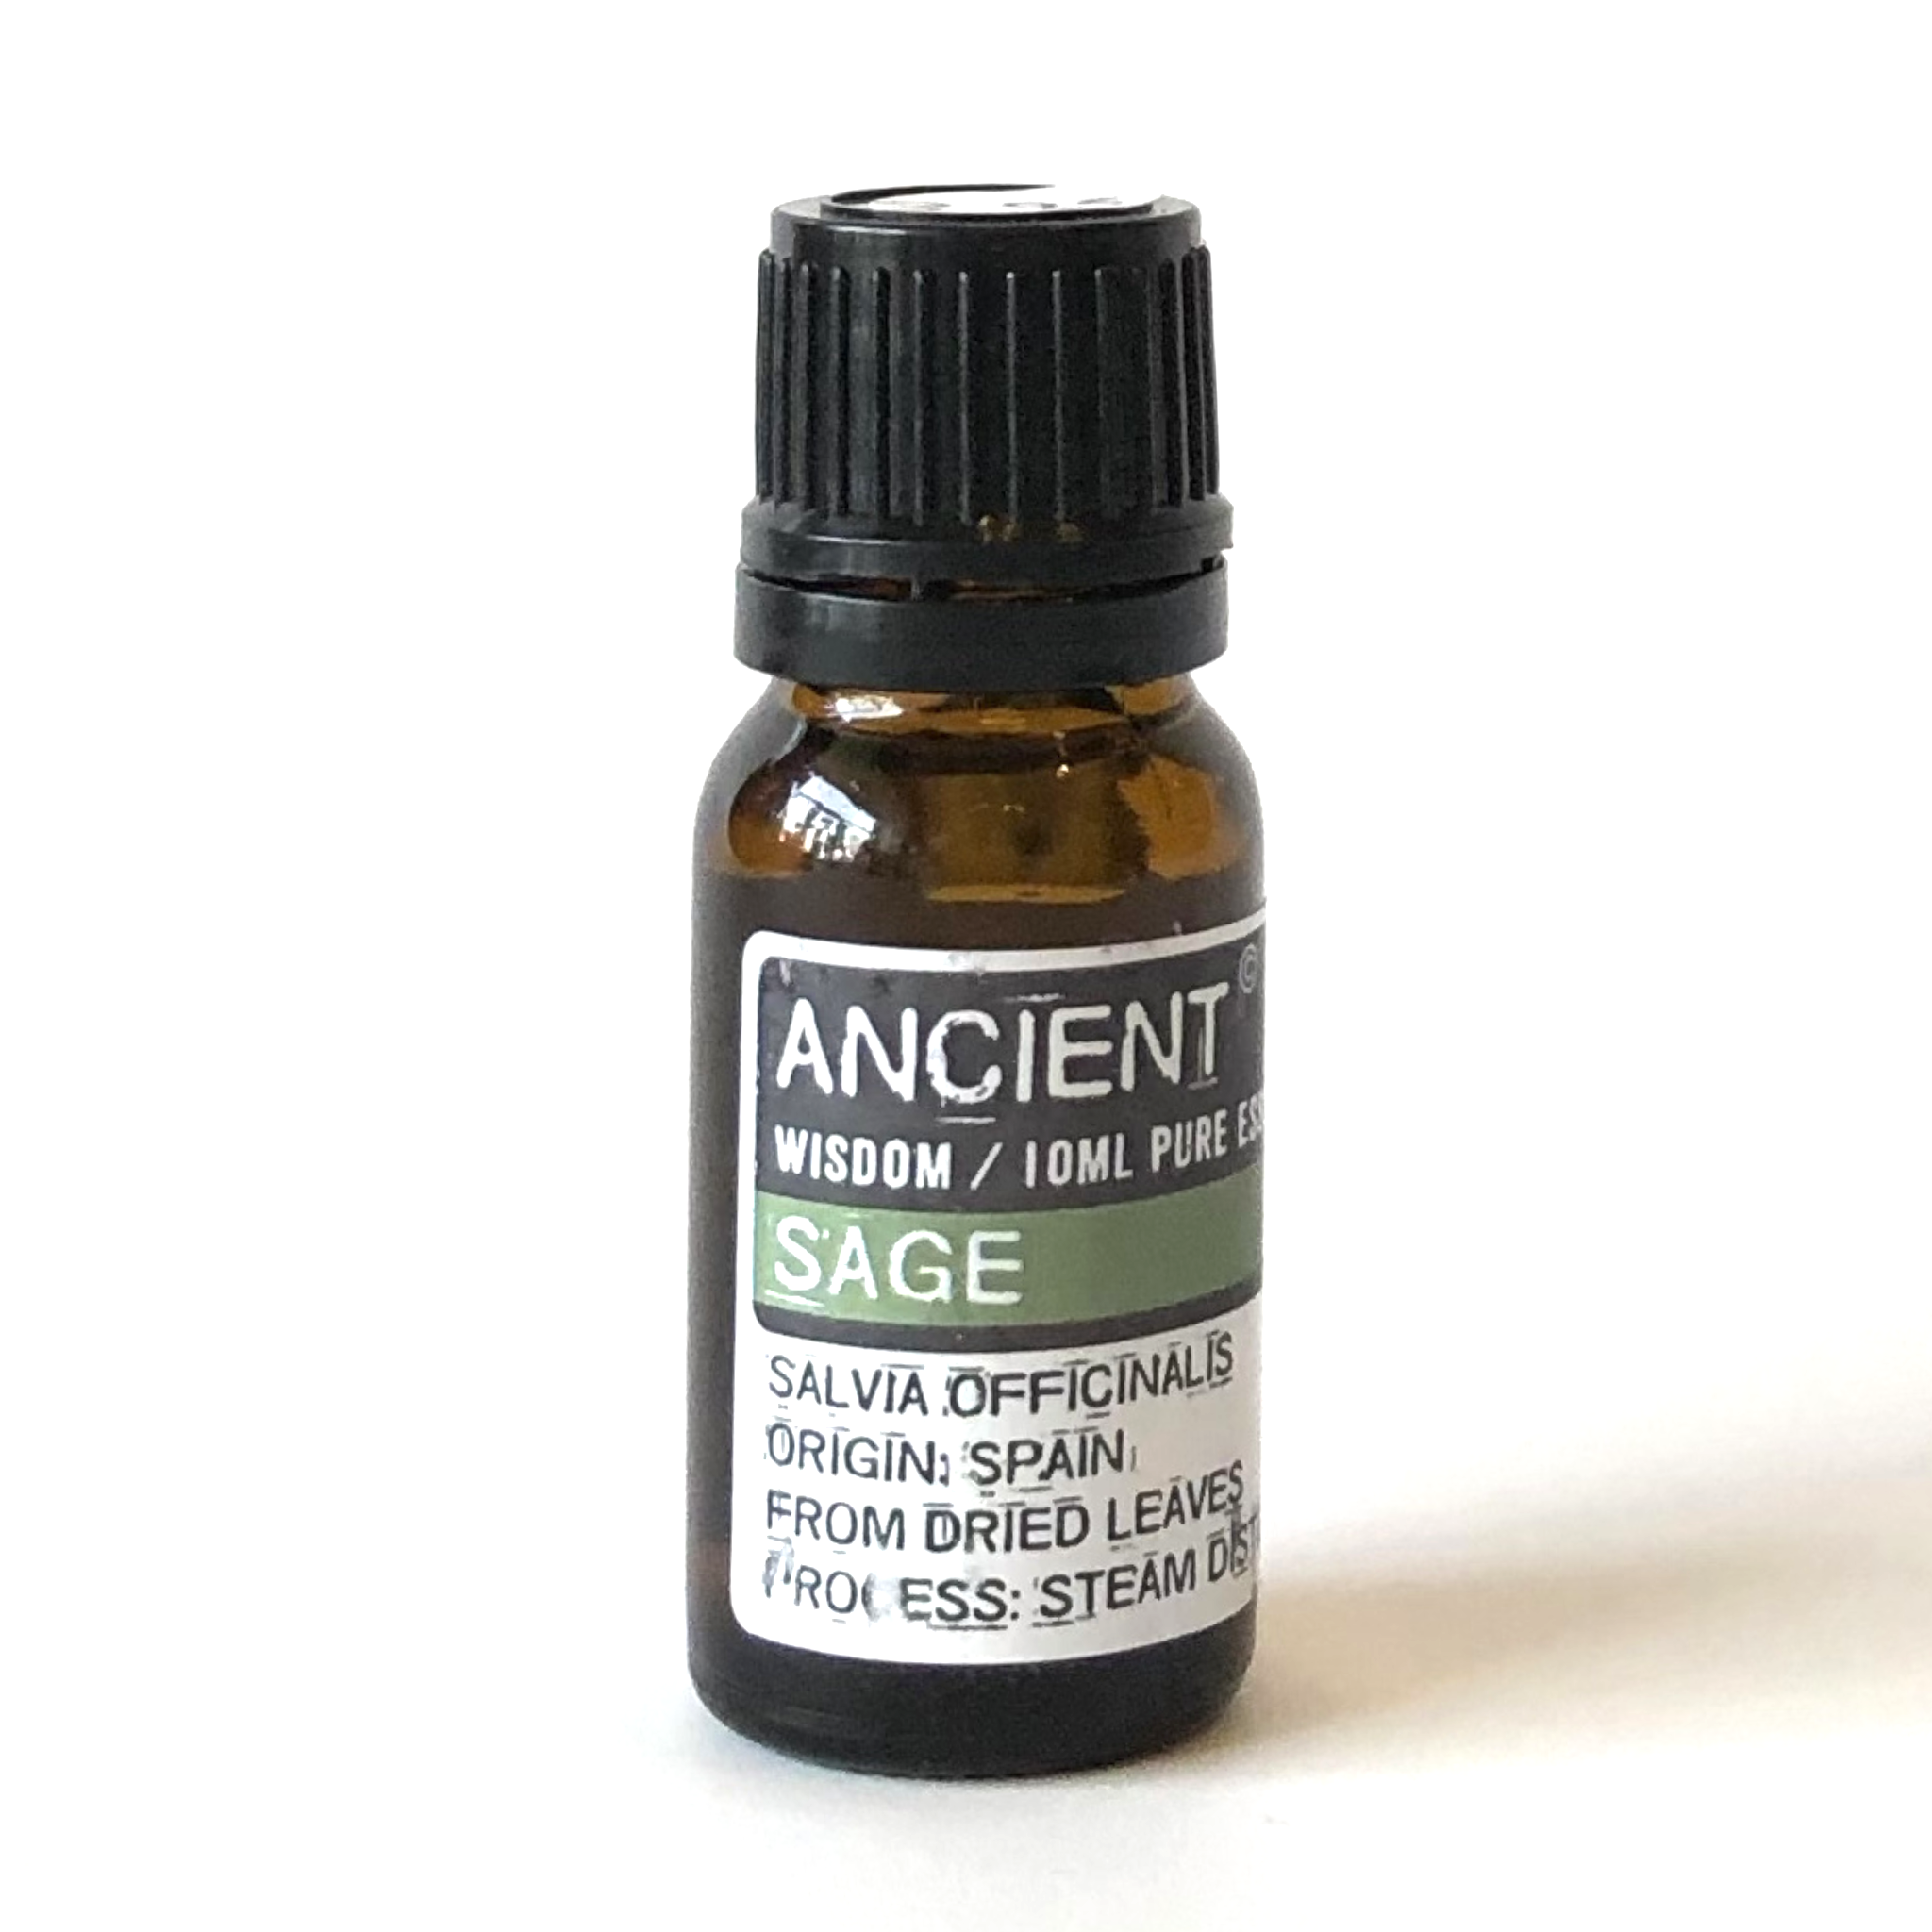 Sage Essential Oil 10ml